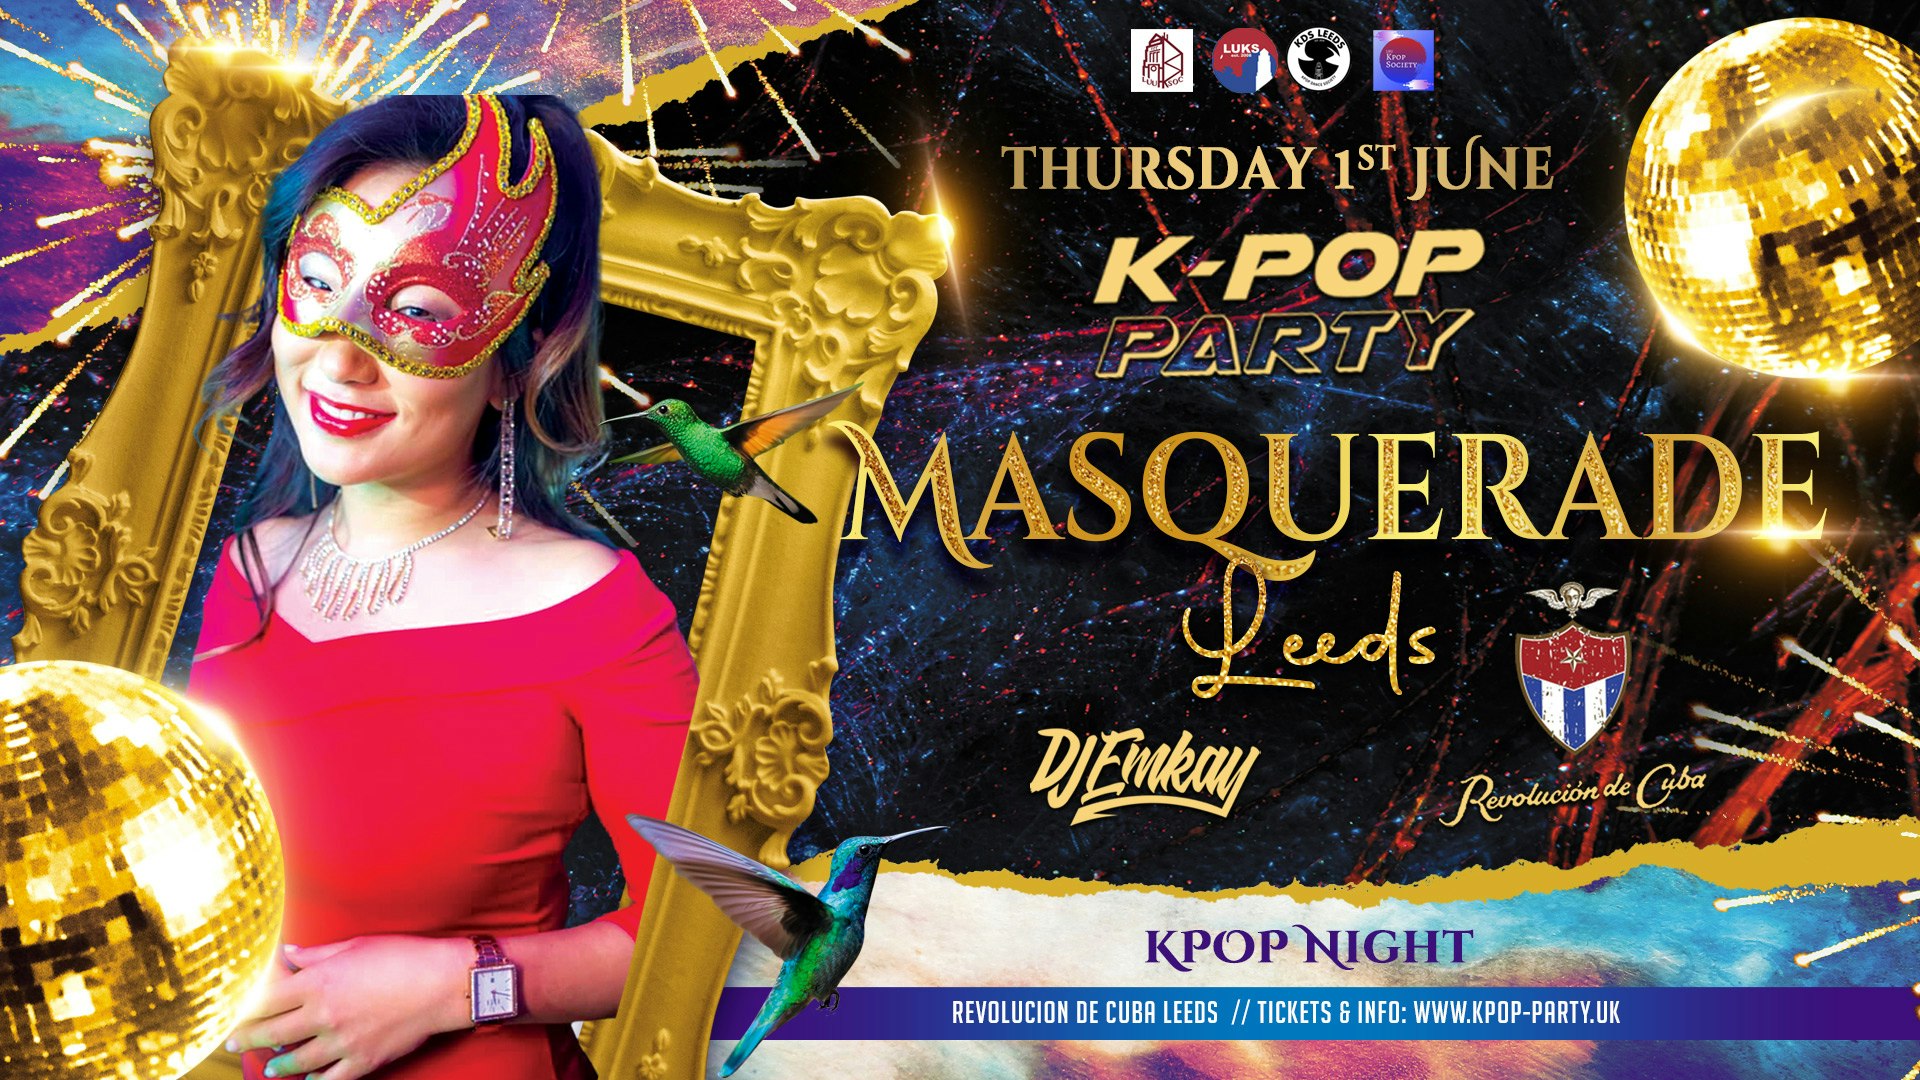 K-Pop Masquerade Party Leeds – with DJ EMKAY | Thursday 1st June